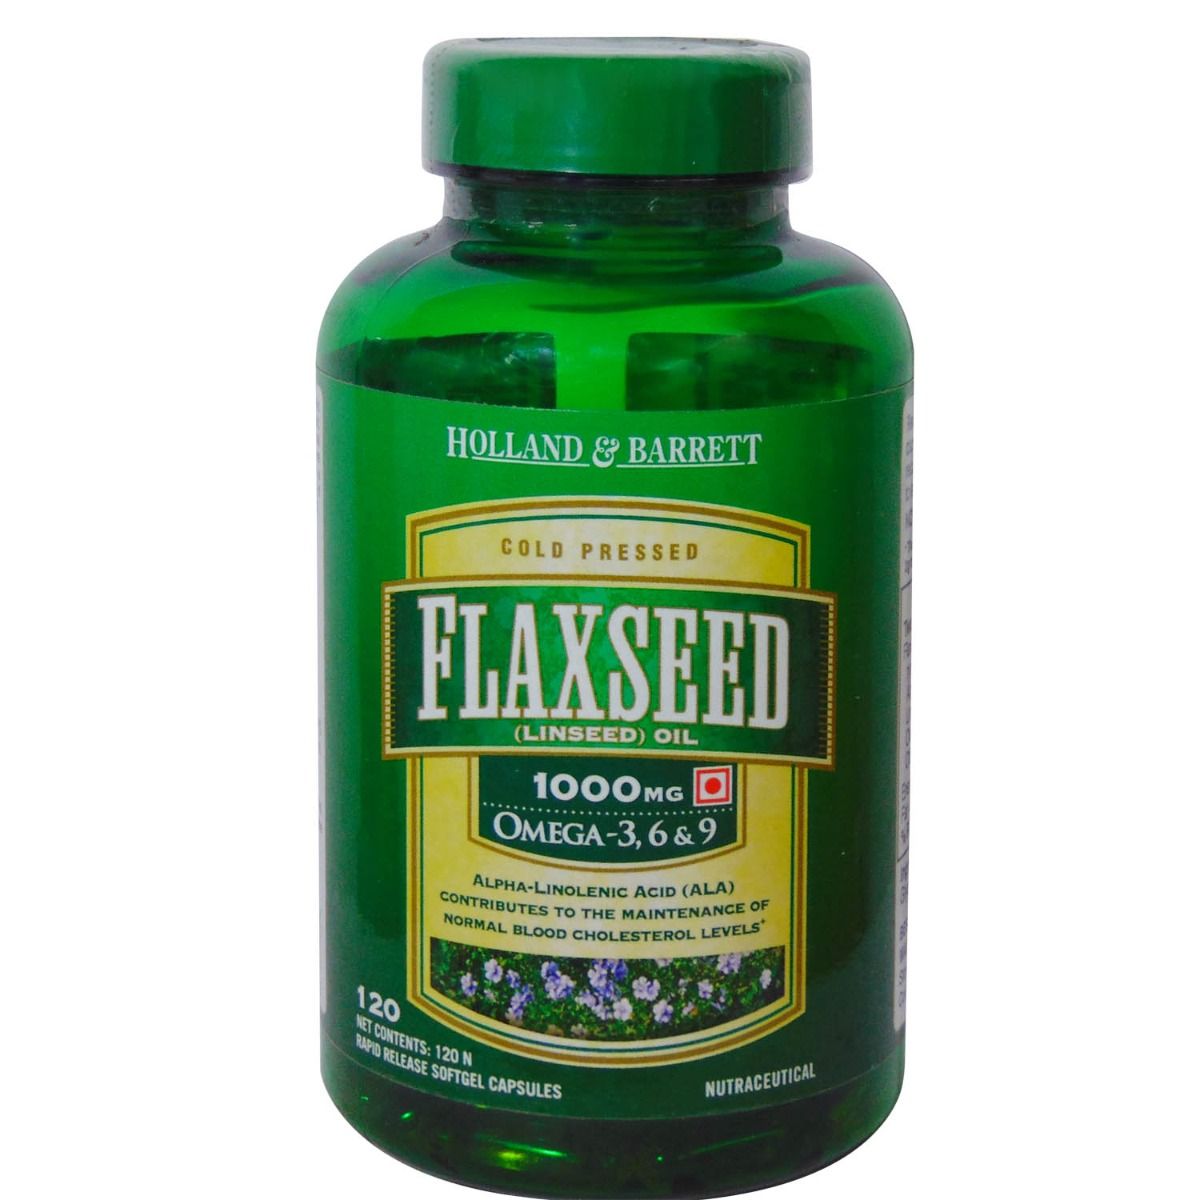 Buy Holland & Barrett Flaxseed Oil 1000 mg, 120 Capsules Online